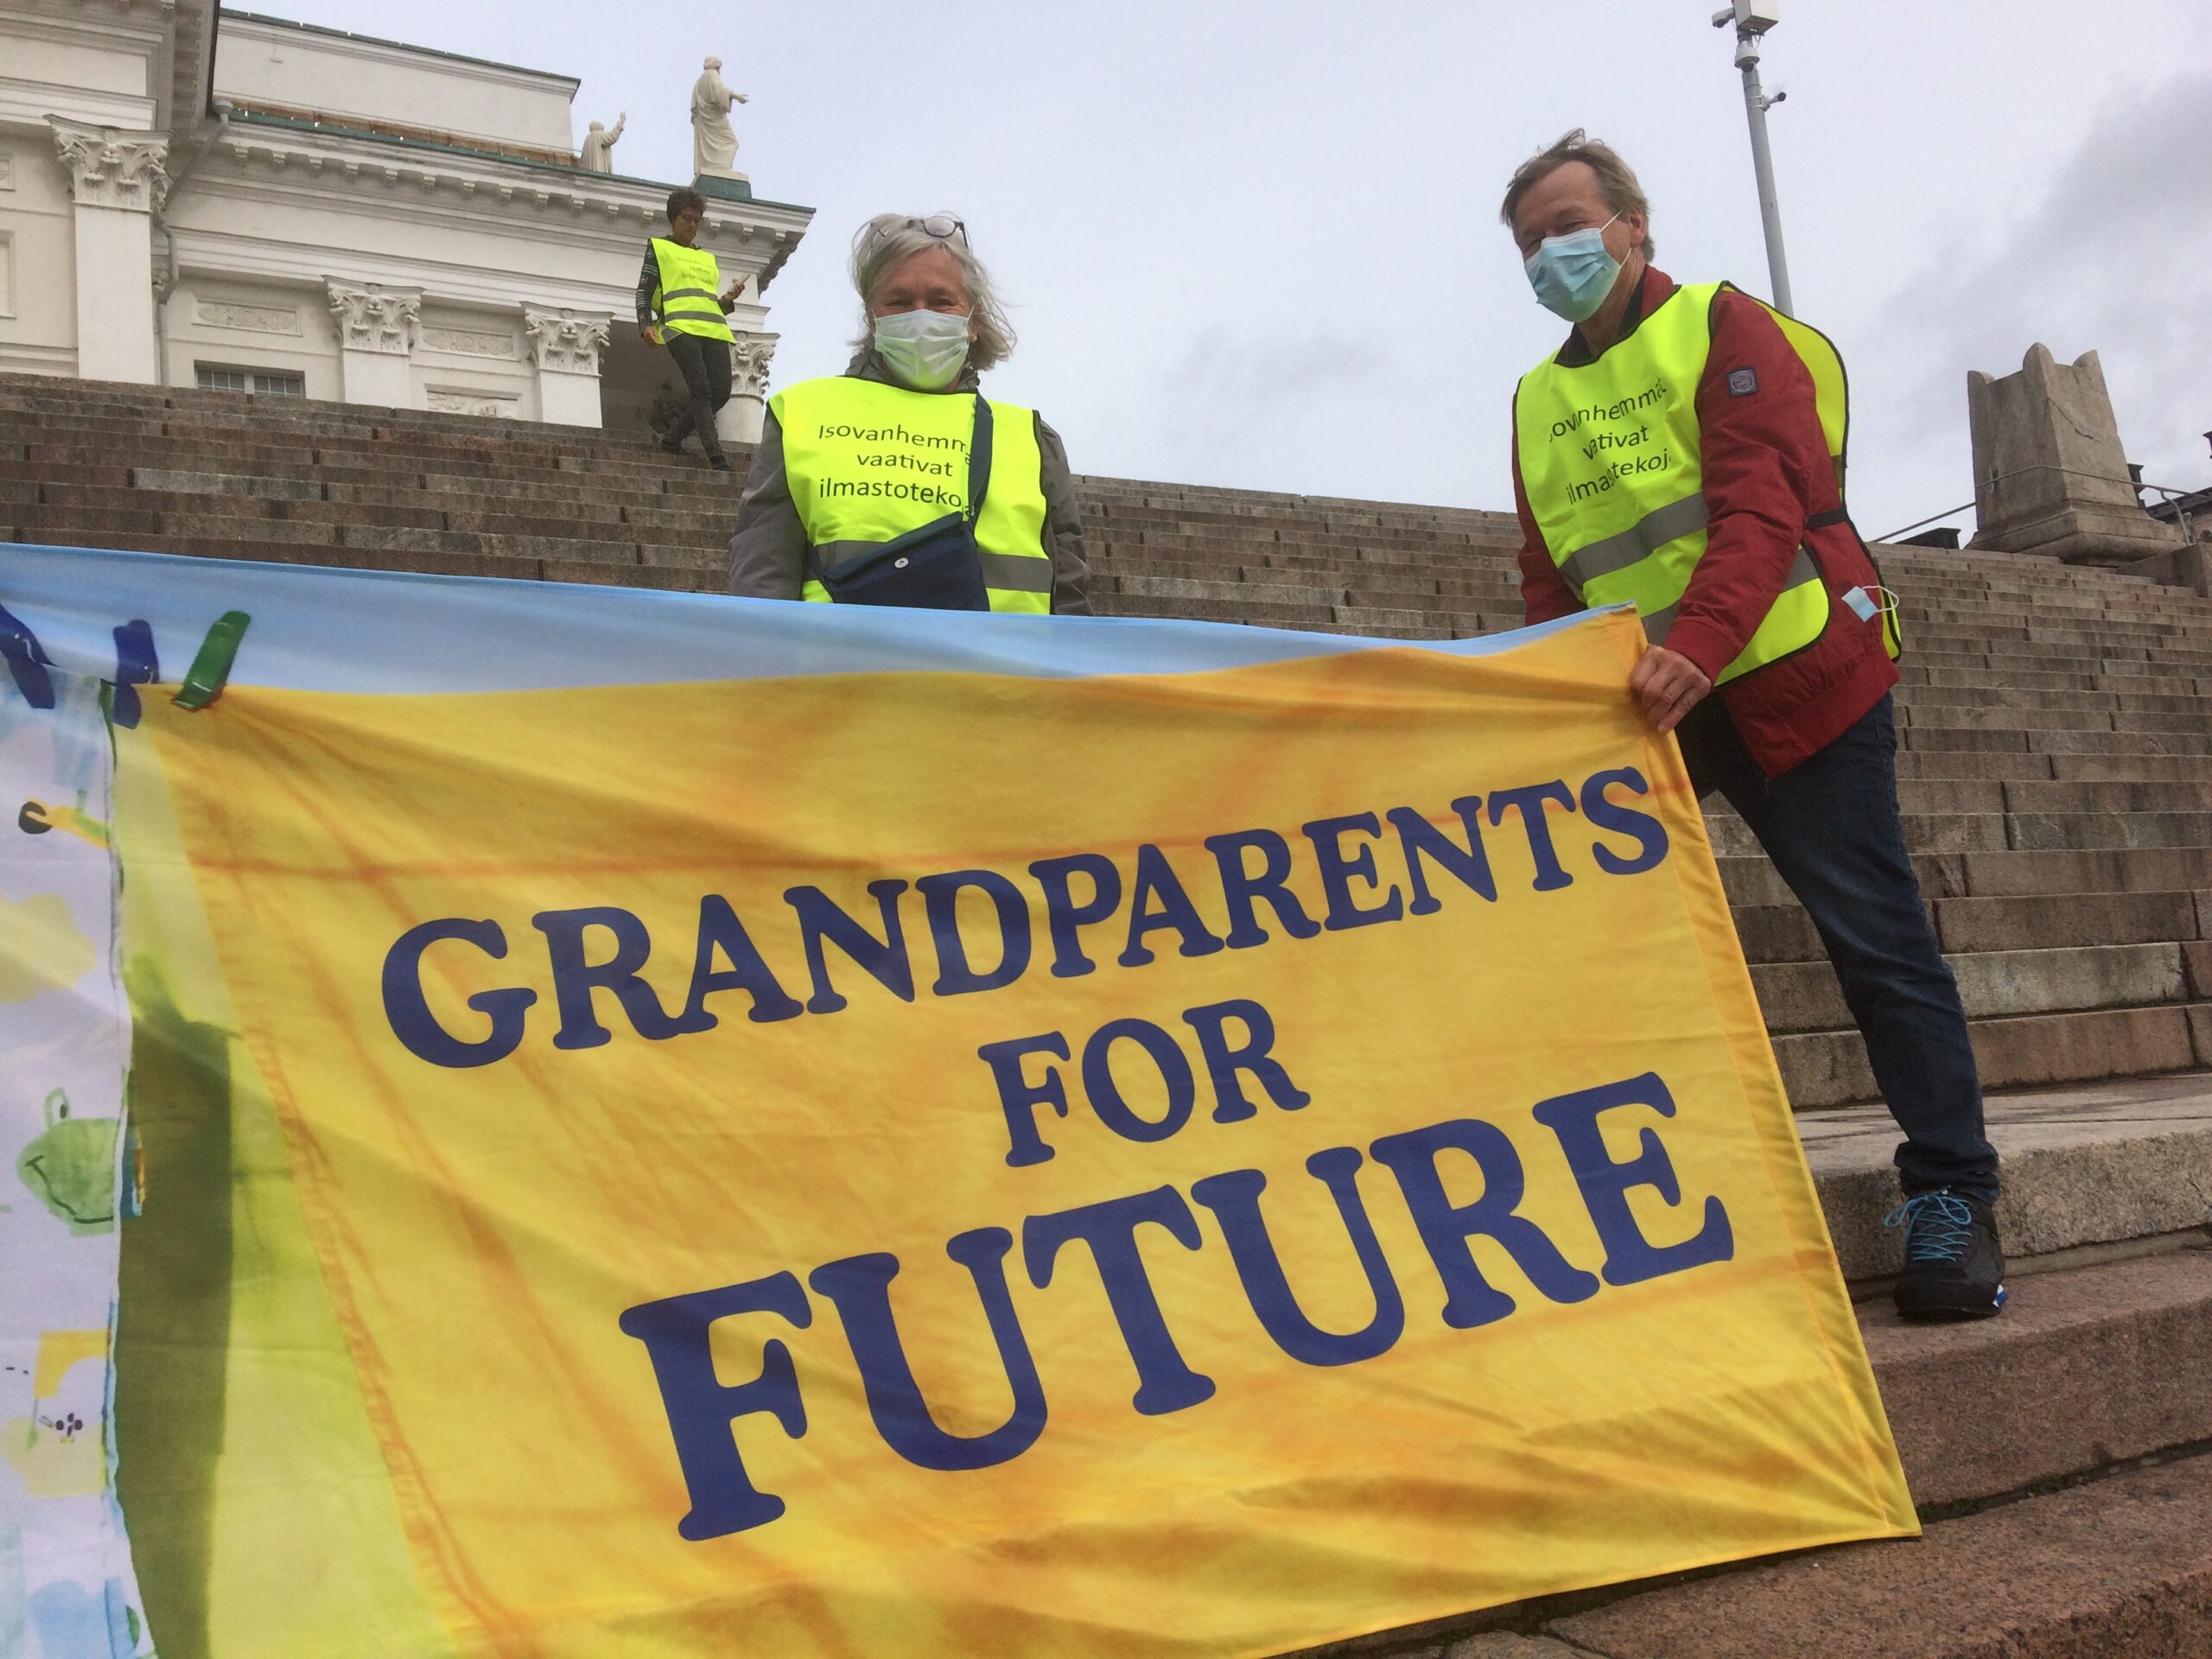 Banner "Grandparents for future"